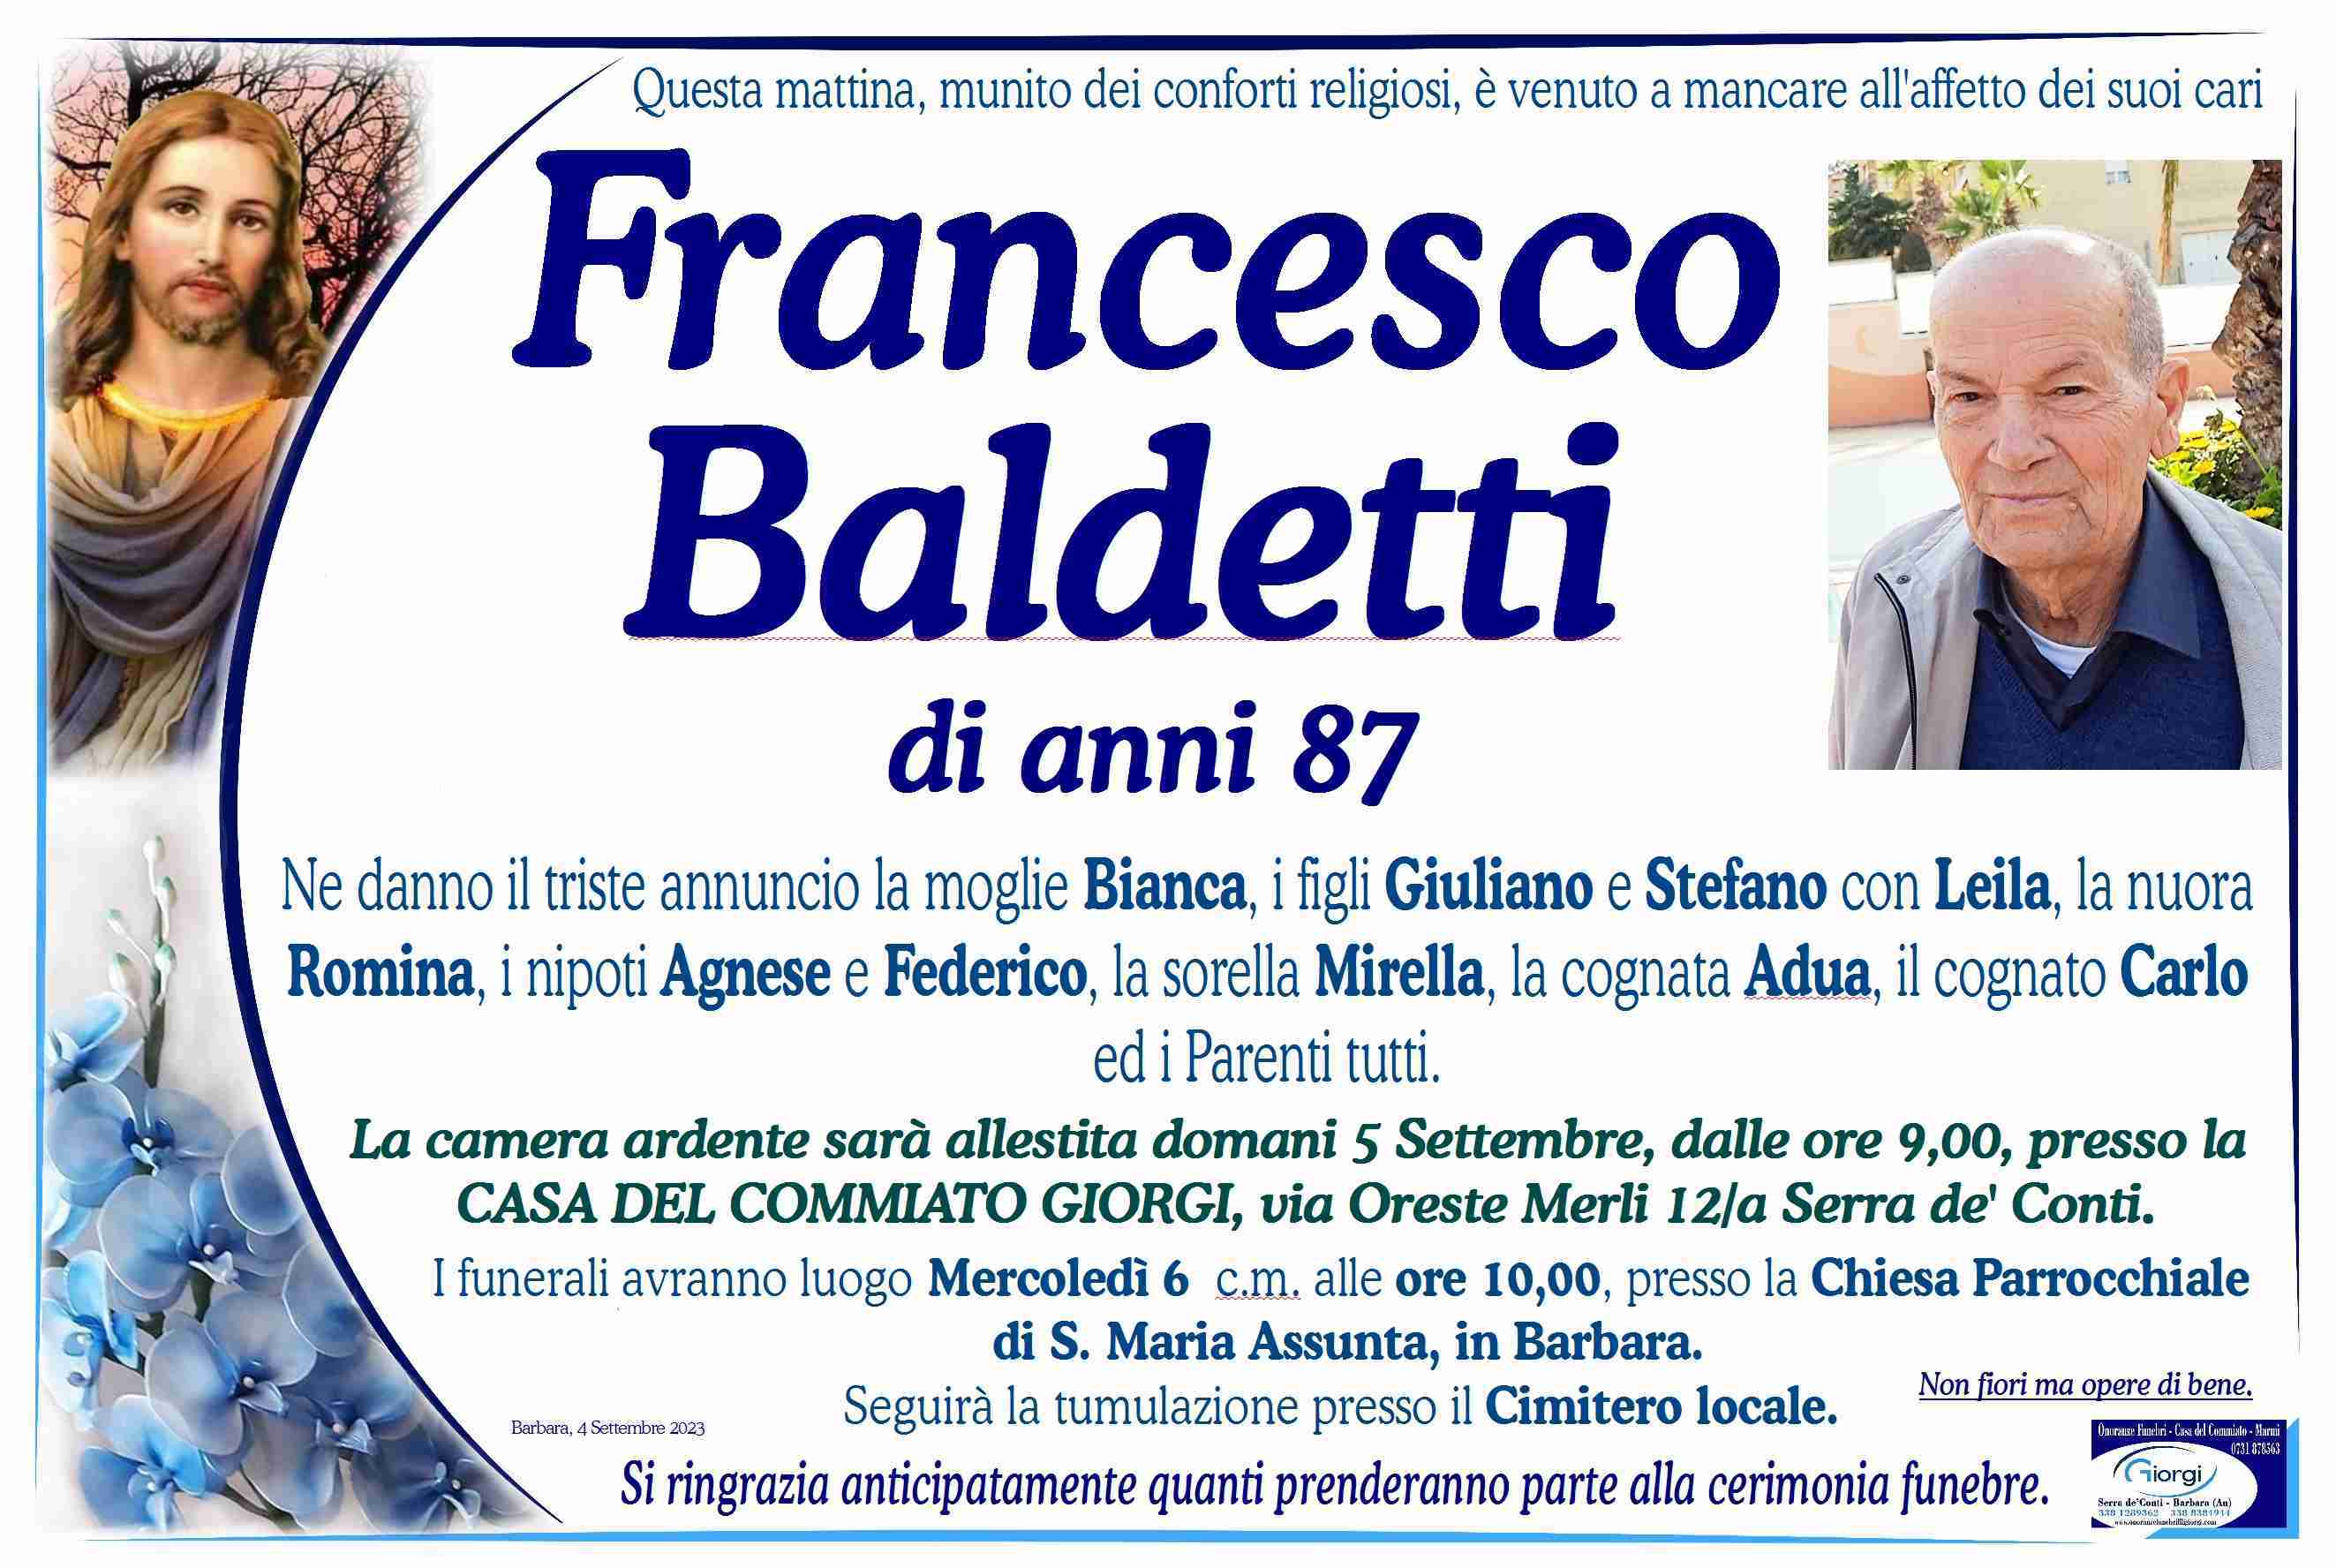 Francesco Baldetti